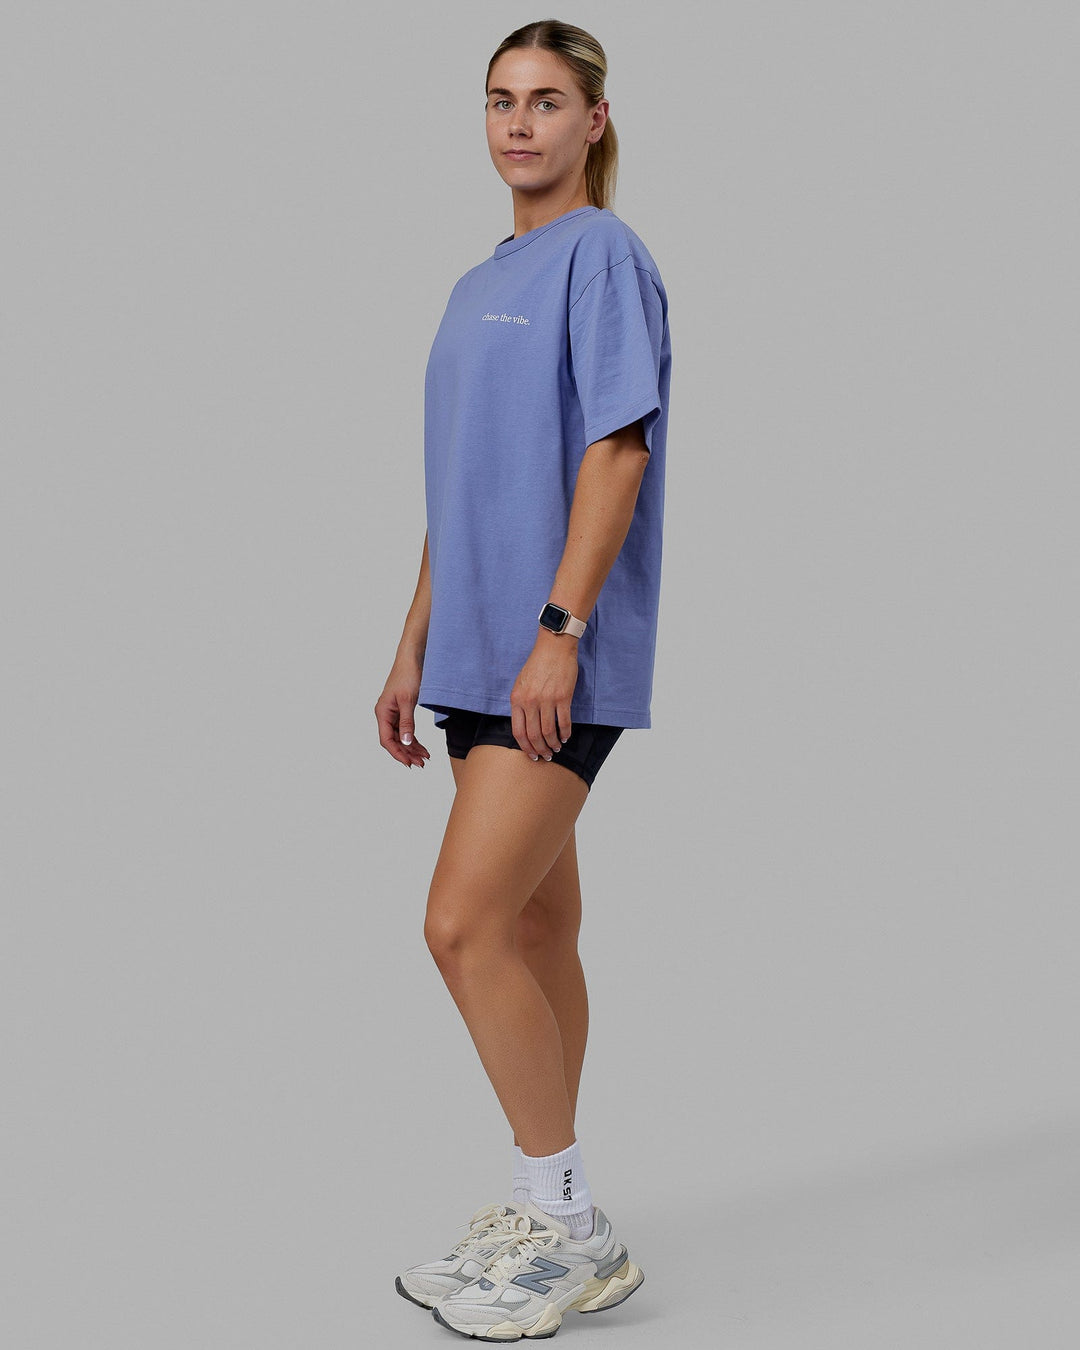 Woman wearing Unisex Taylor Tee Oversize - Cornflower Blue